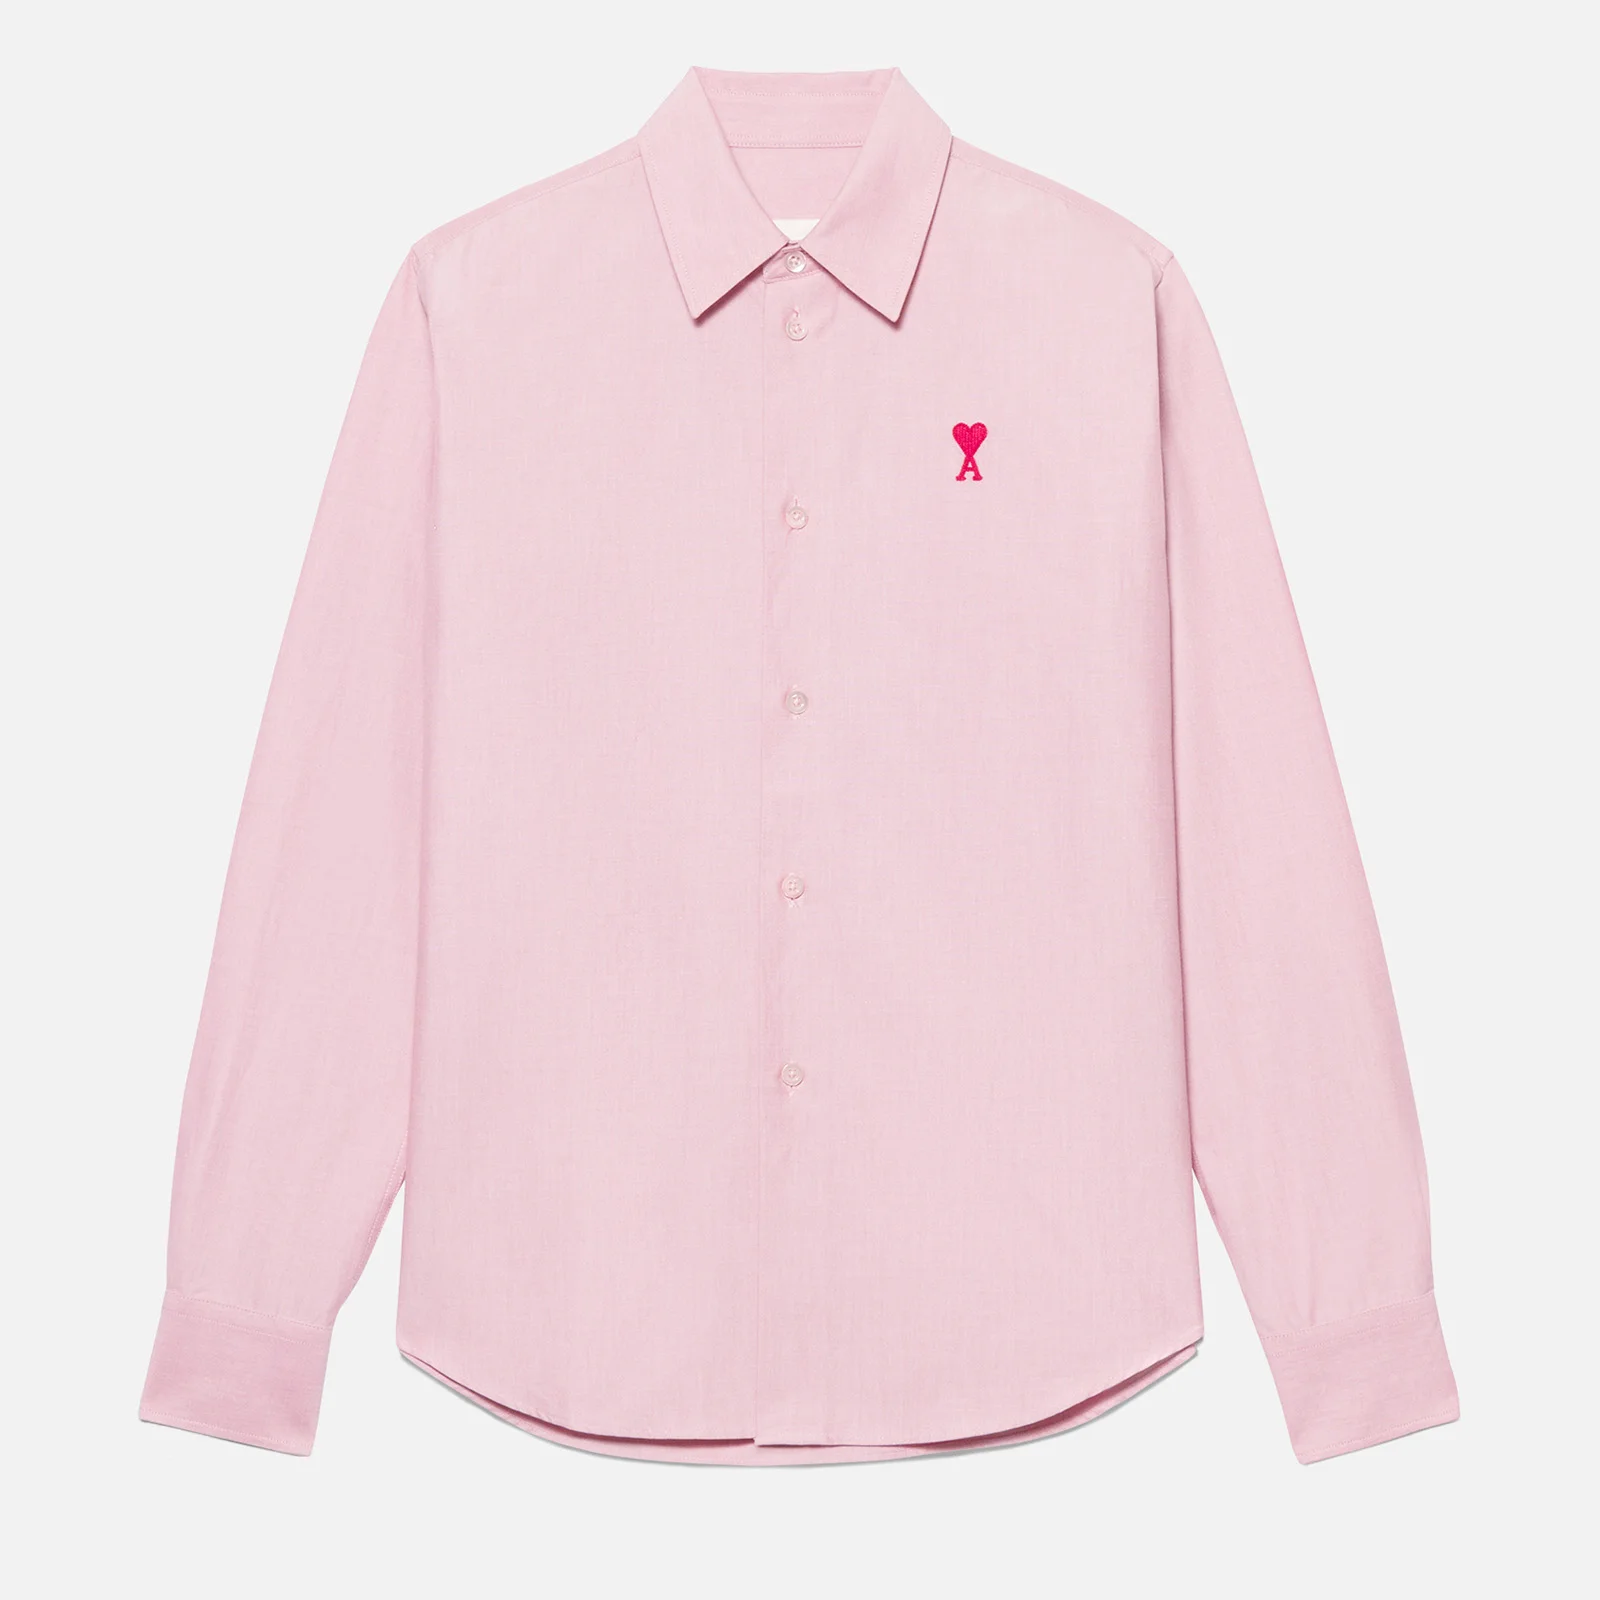 AMI Women's De Coeur Oxford Shirt - Pale Pink Image 1